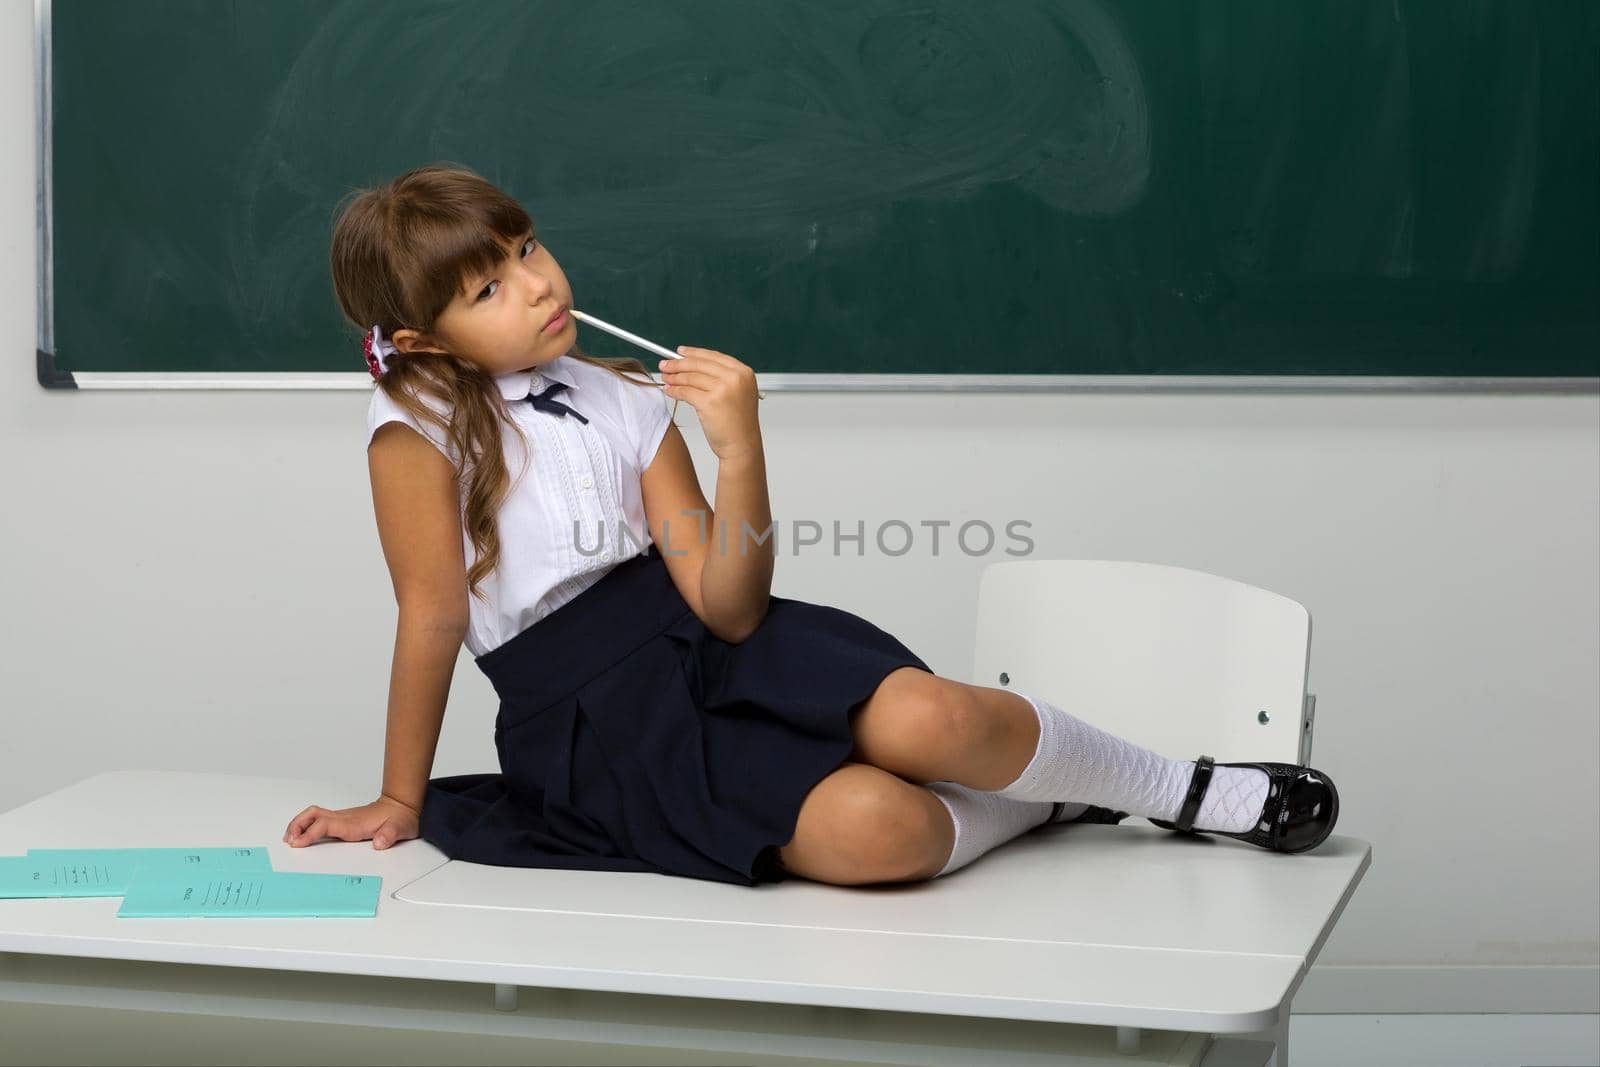 Cute girl sitting on desk in classroom by kolesnikov_studio